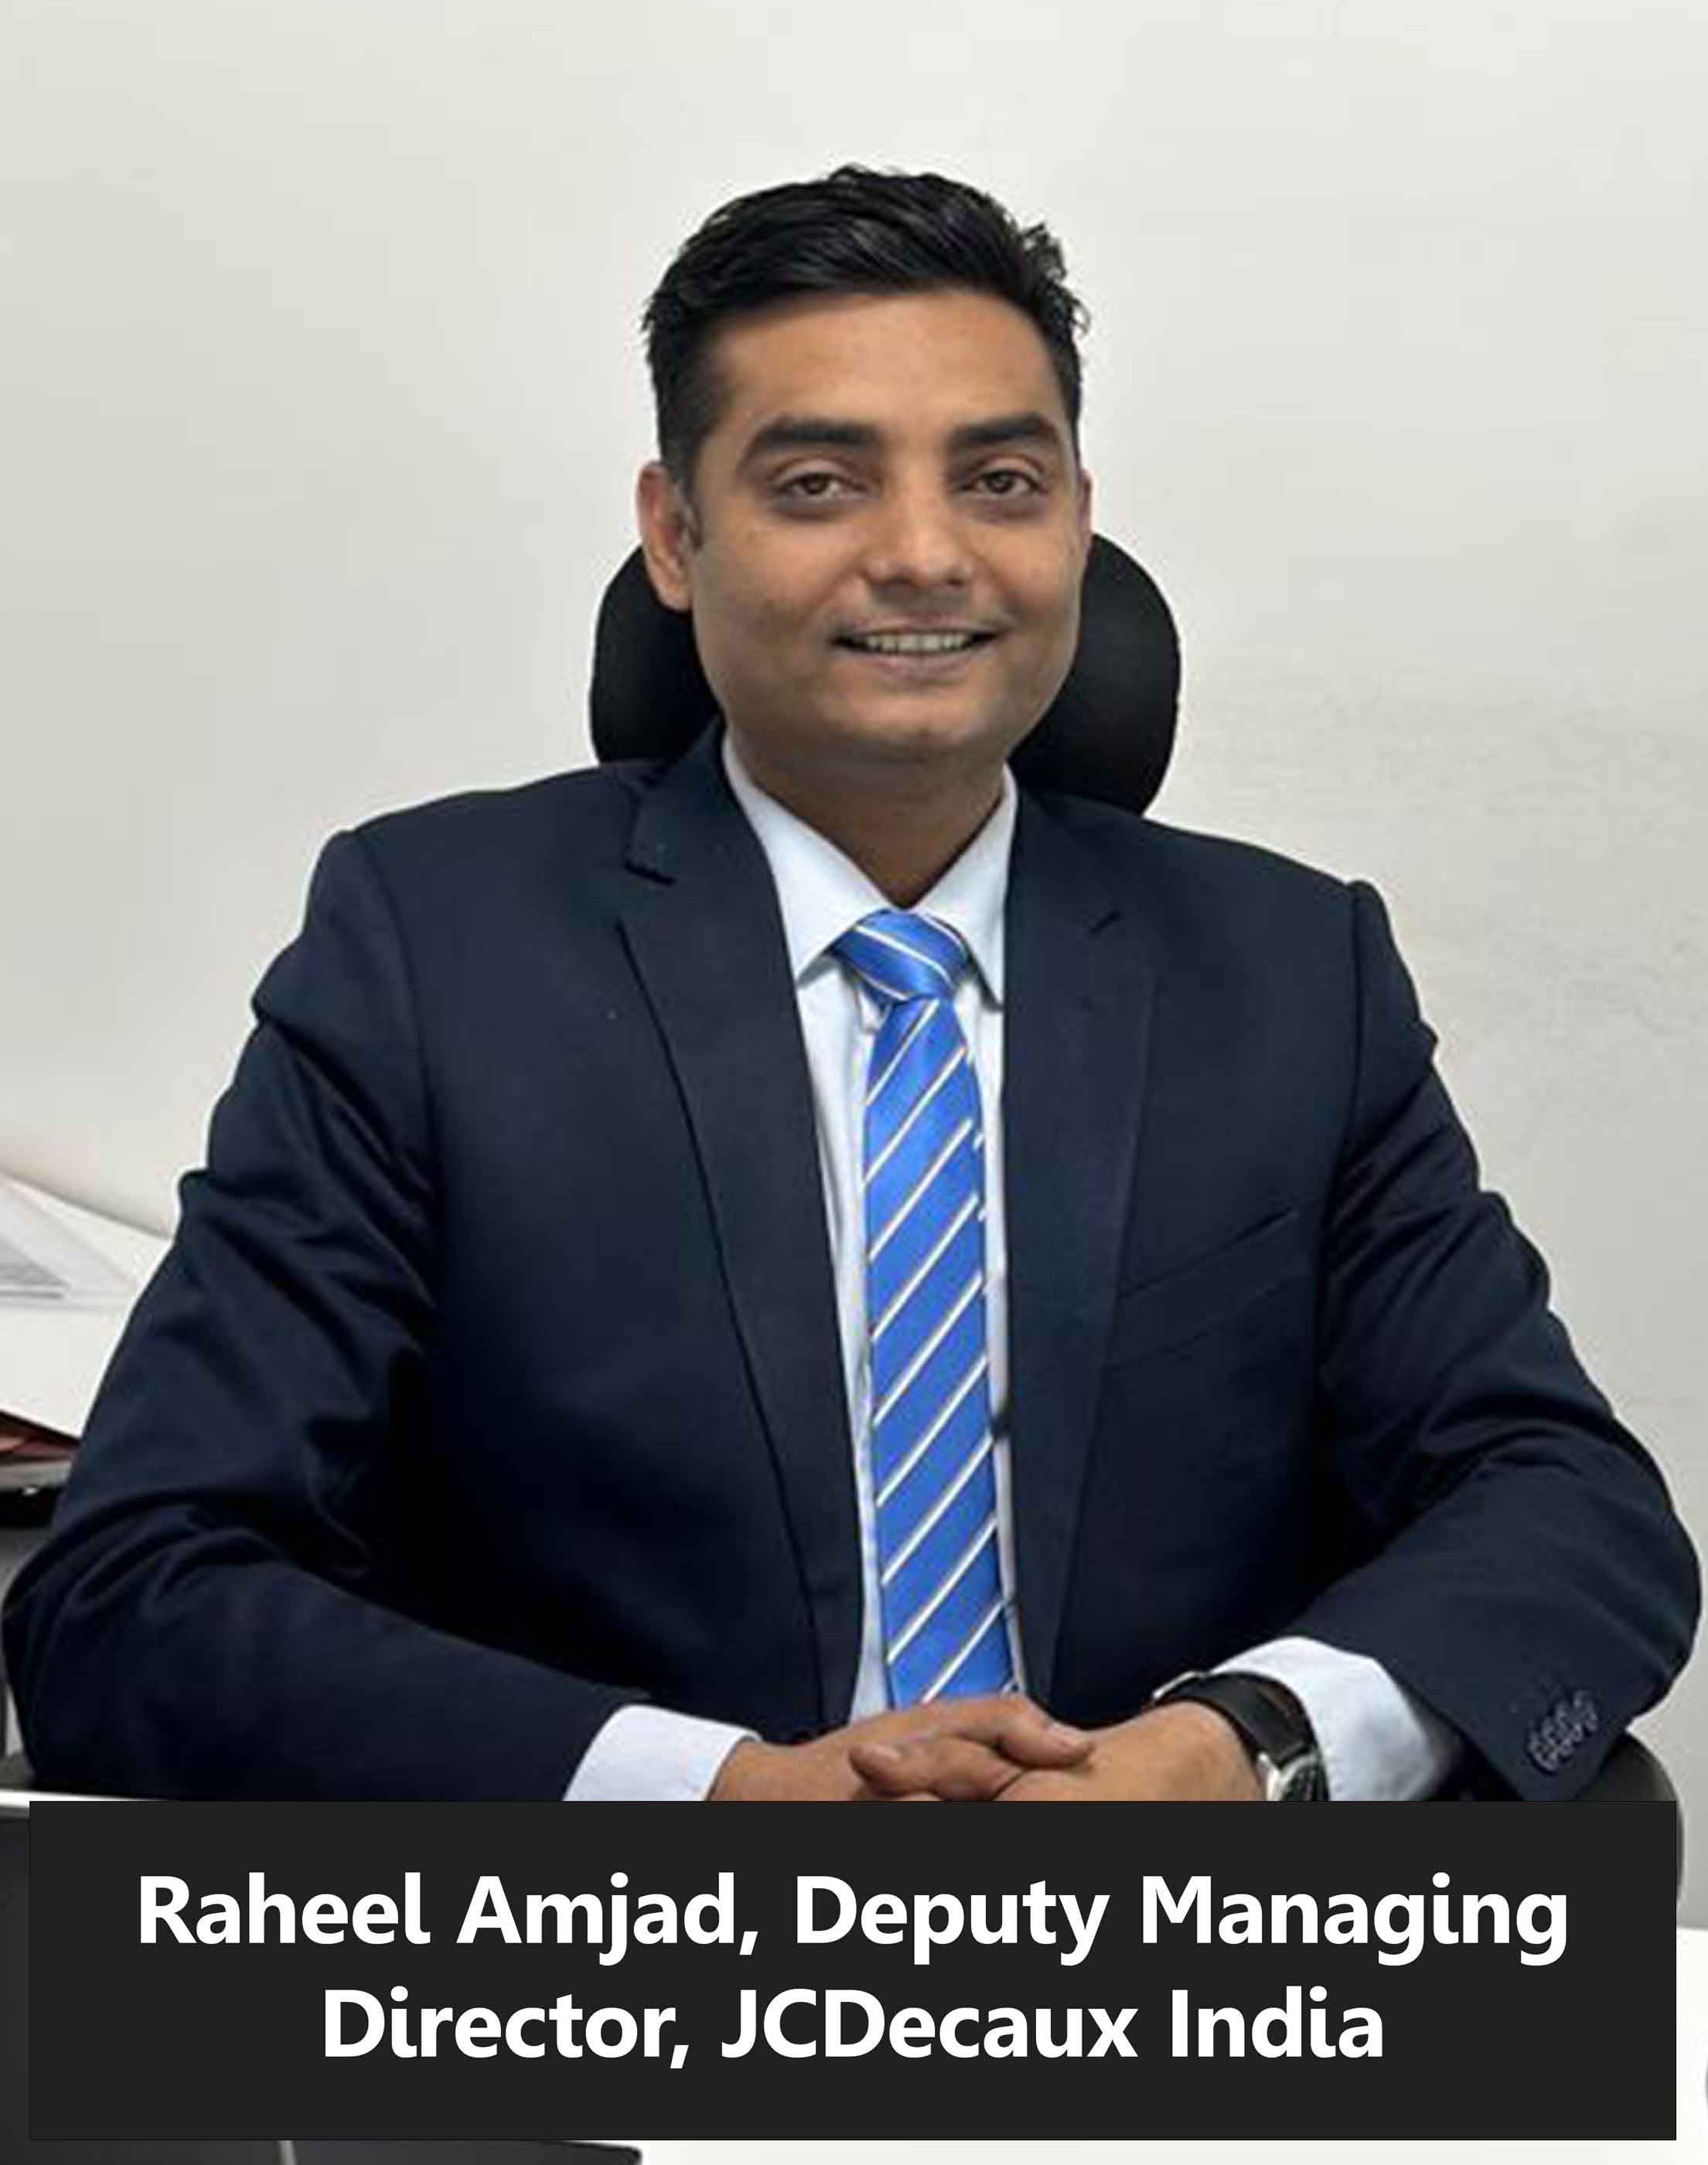 Raheel Amjad, Deputy Managing Director, JCDecaux India